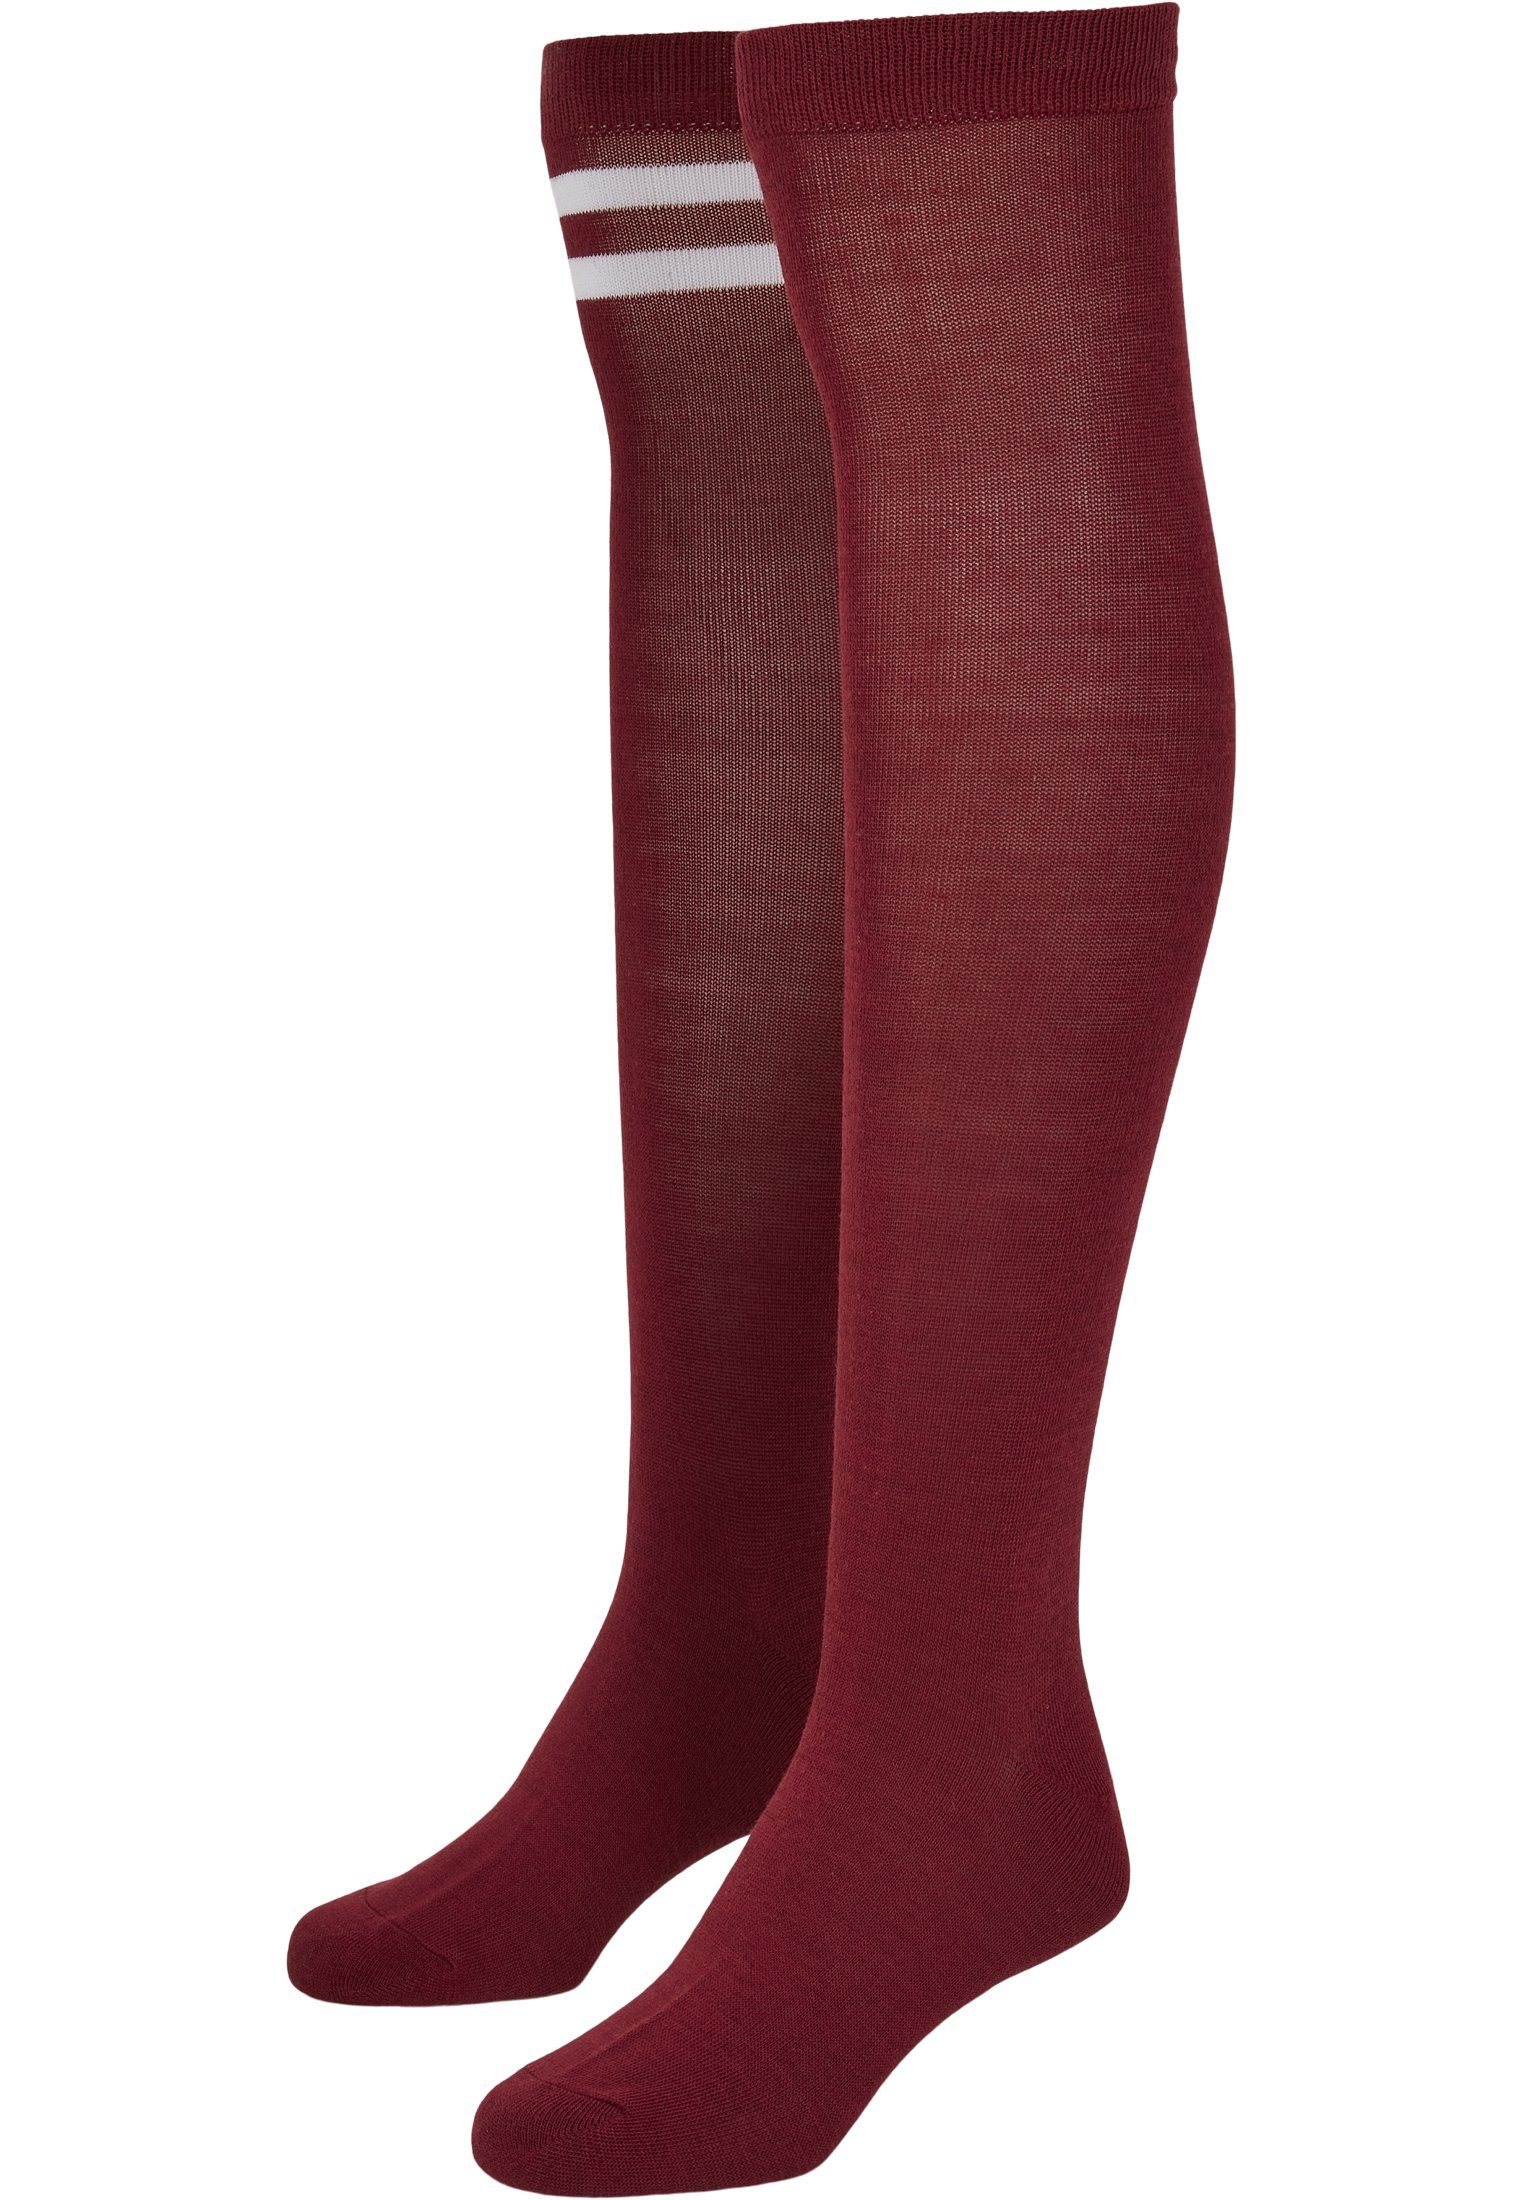 URBAN CLASSICS Freizeitsocken Accessoires Ladies burgundy College (1-Paar) Socks 2-Pack